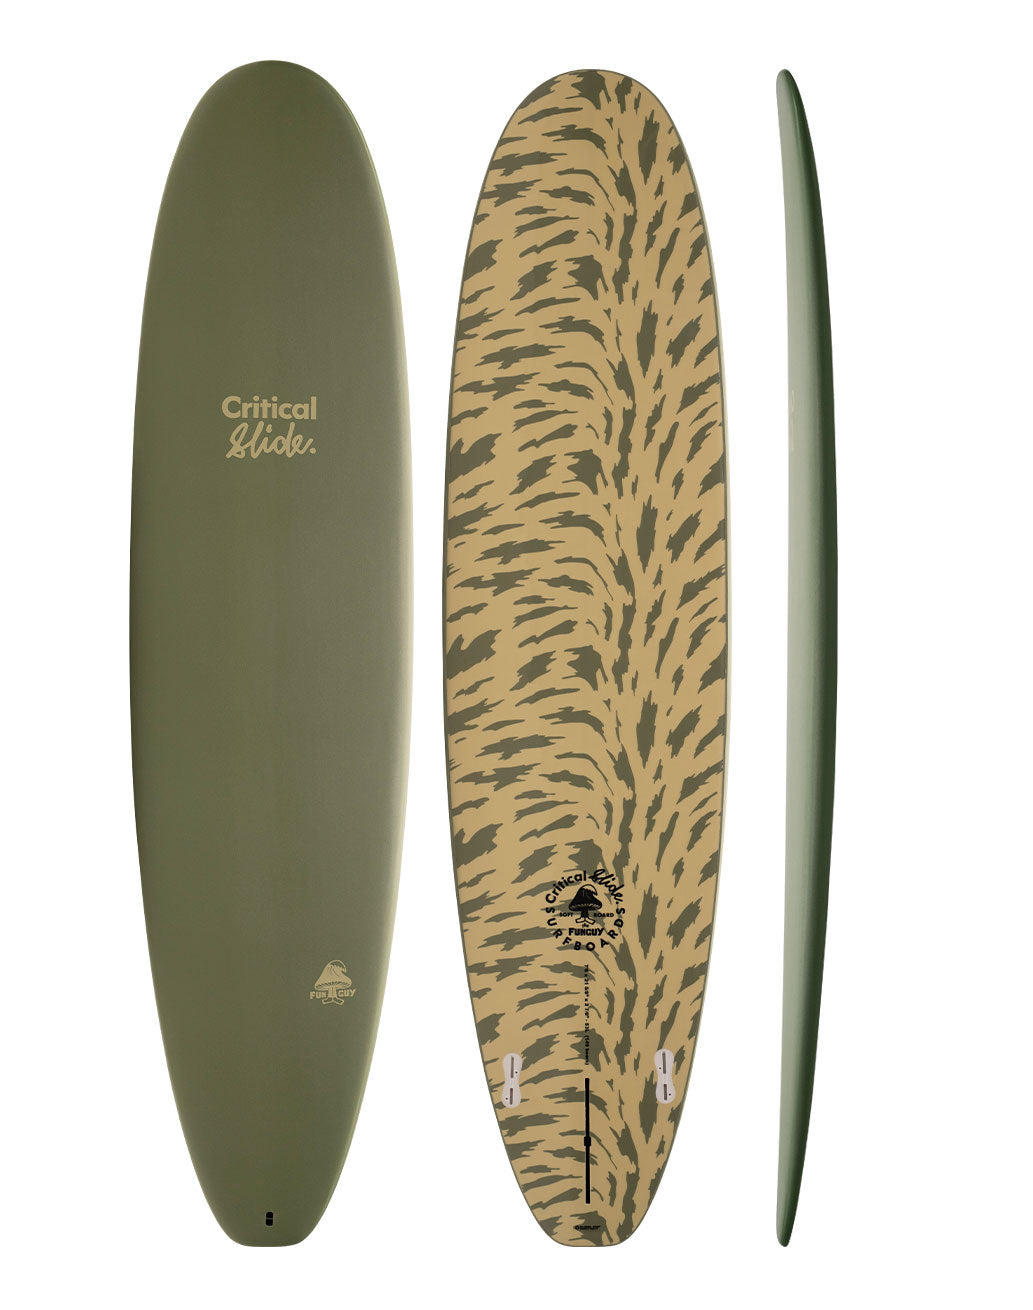 The Critical Slide Society Surfboards - Fun Guy jade and bone soft surfboard